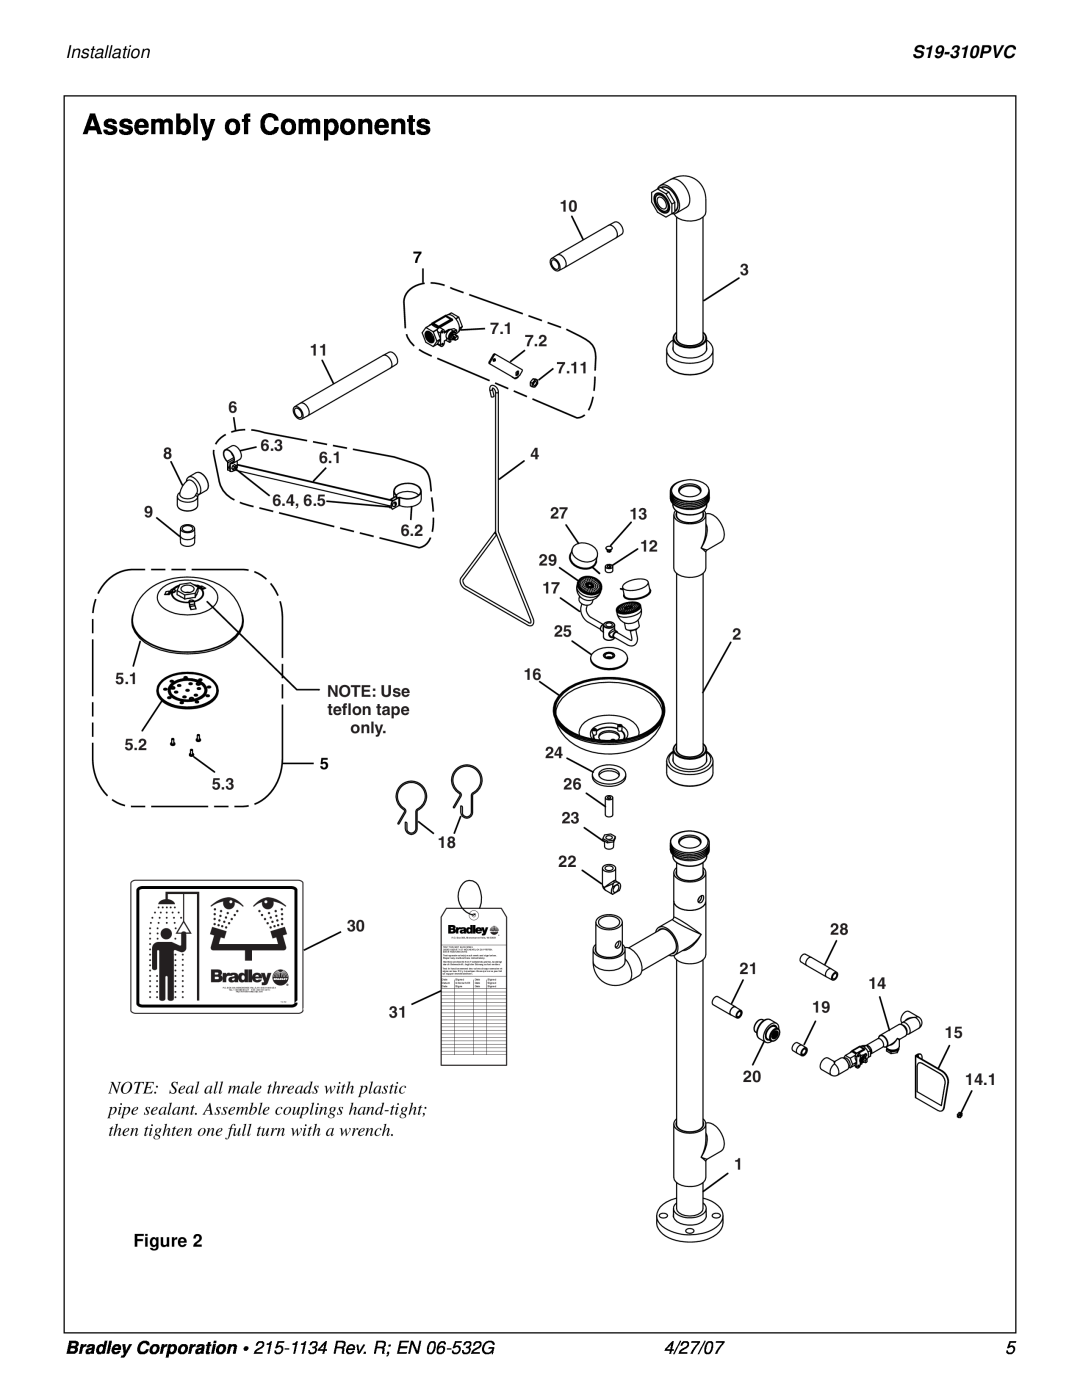 Bradley Smoker S19-310PVC Assembly of Components, Installation, Bradley Corporation 215-1134 Rev. R EN 06-532G, 4/27/07 